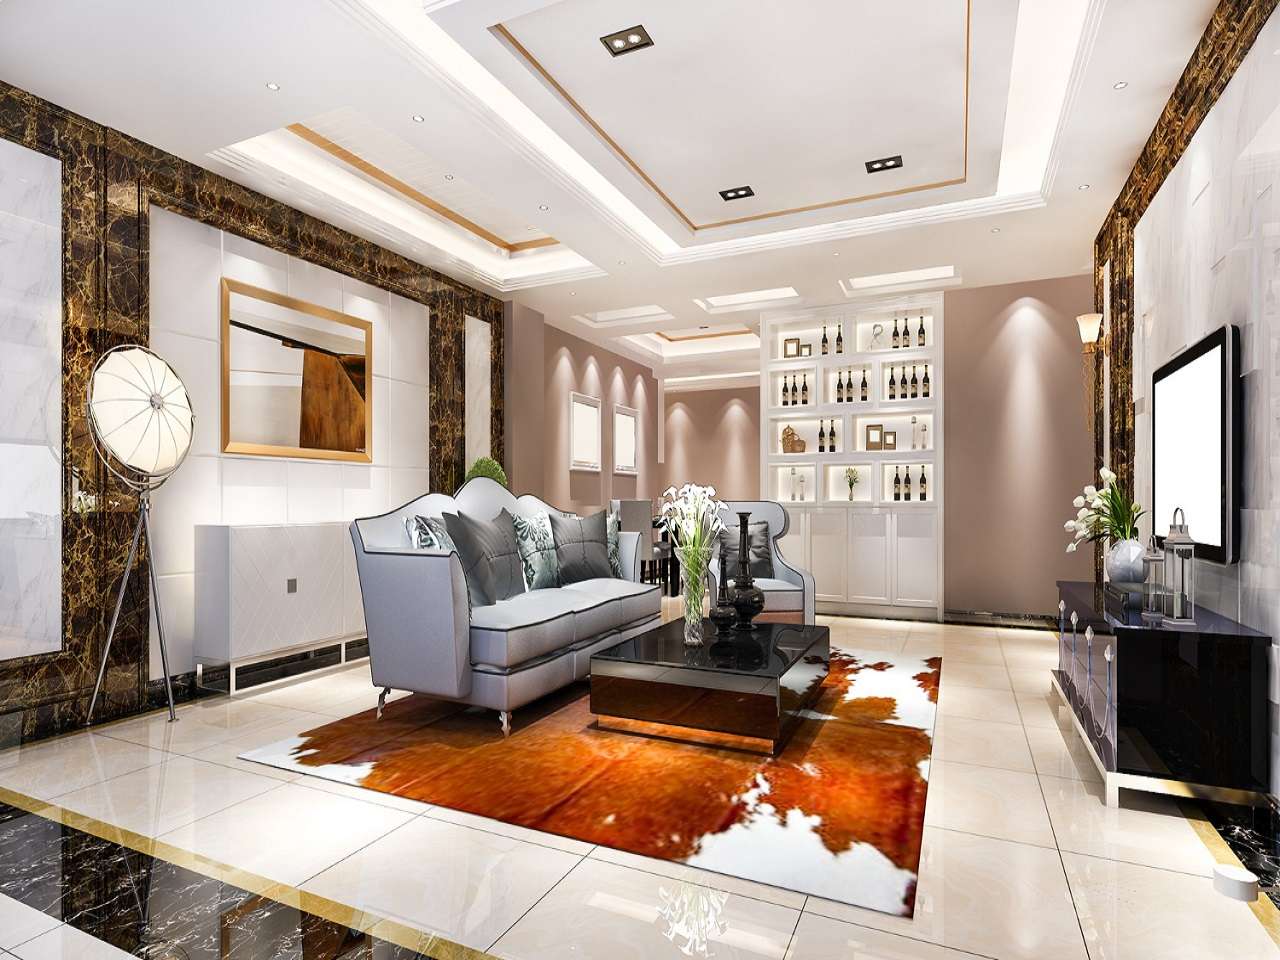 residential interior designers in kolkata, square and angles, pranati enterprise, pranati group